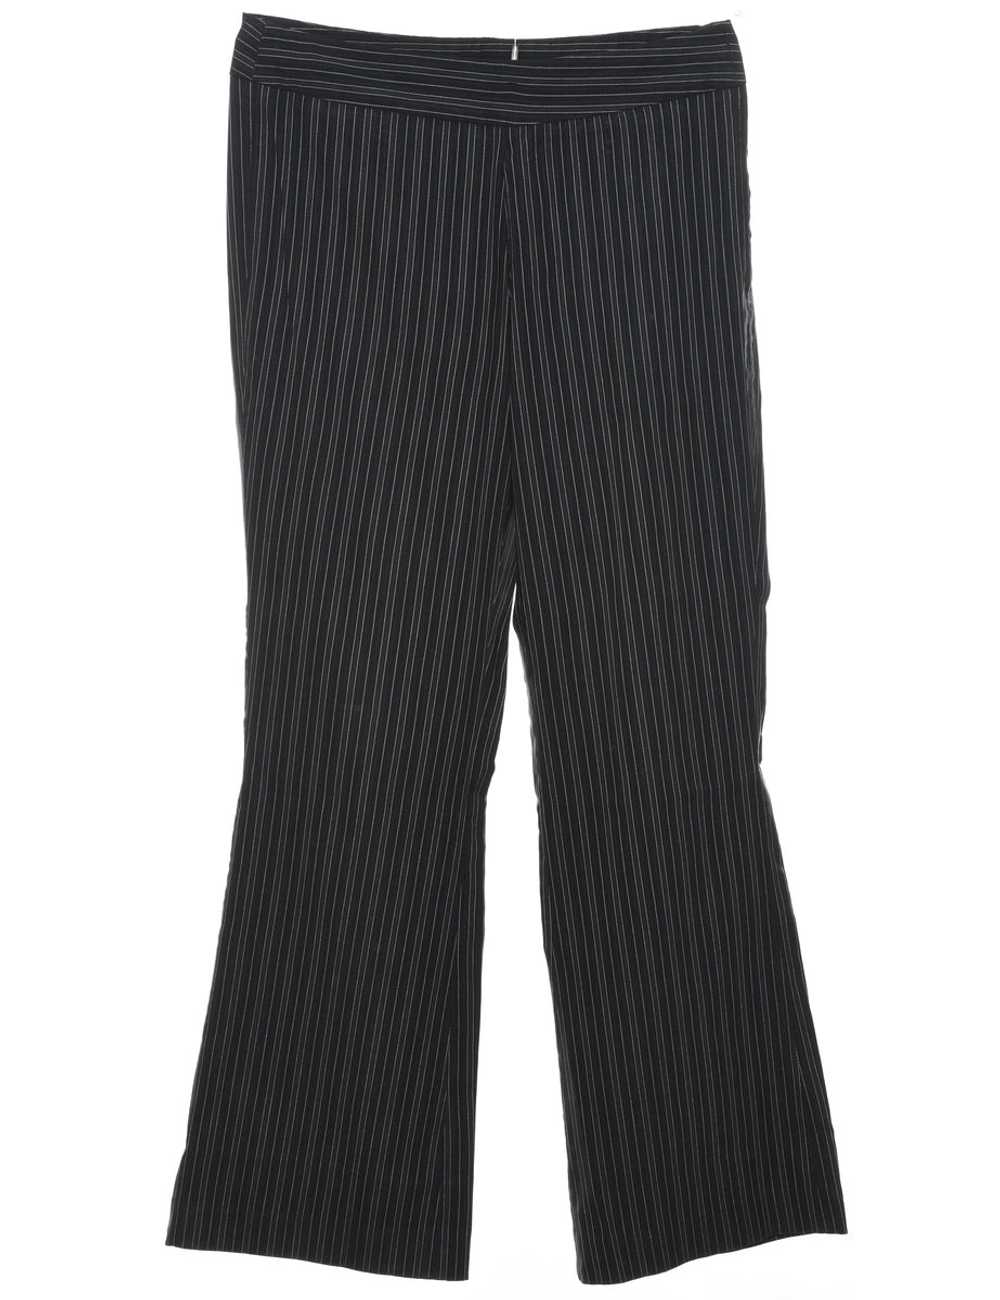 Pinstripes Black Trousers - W30 L29 - image 1